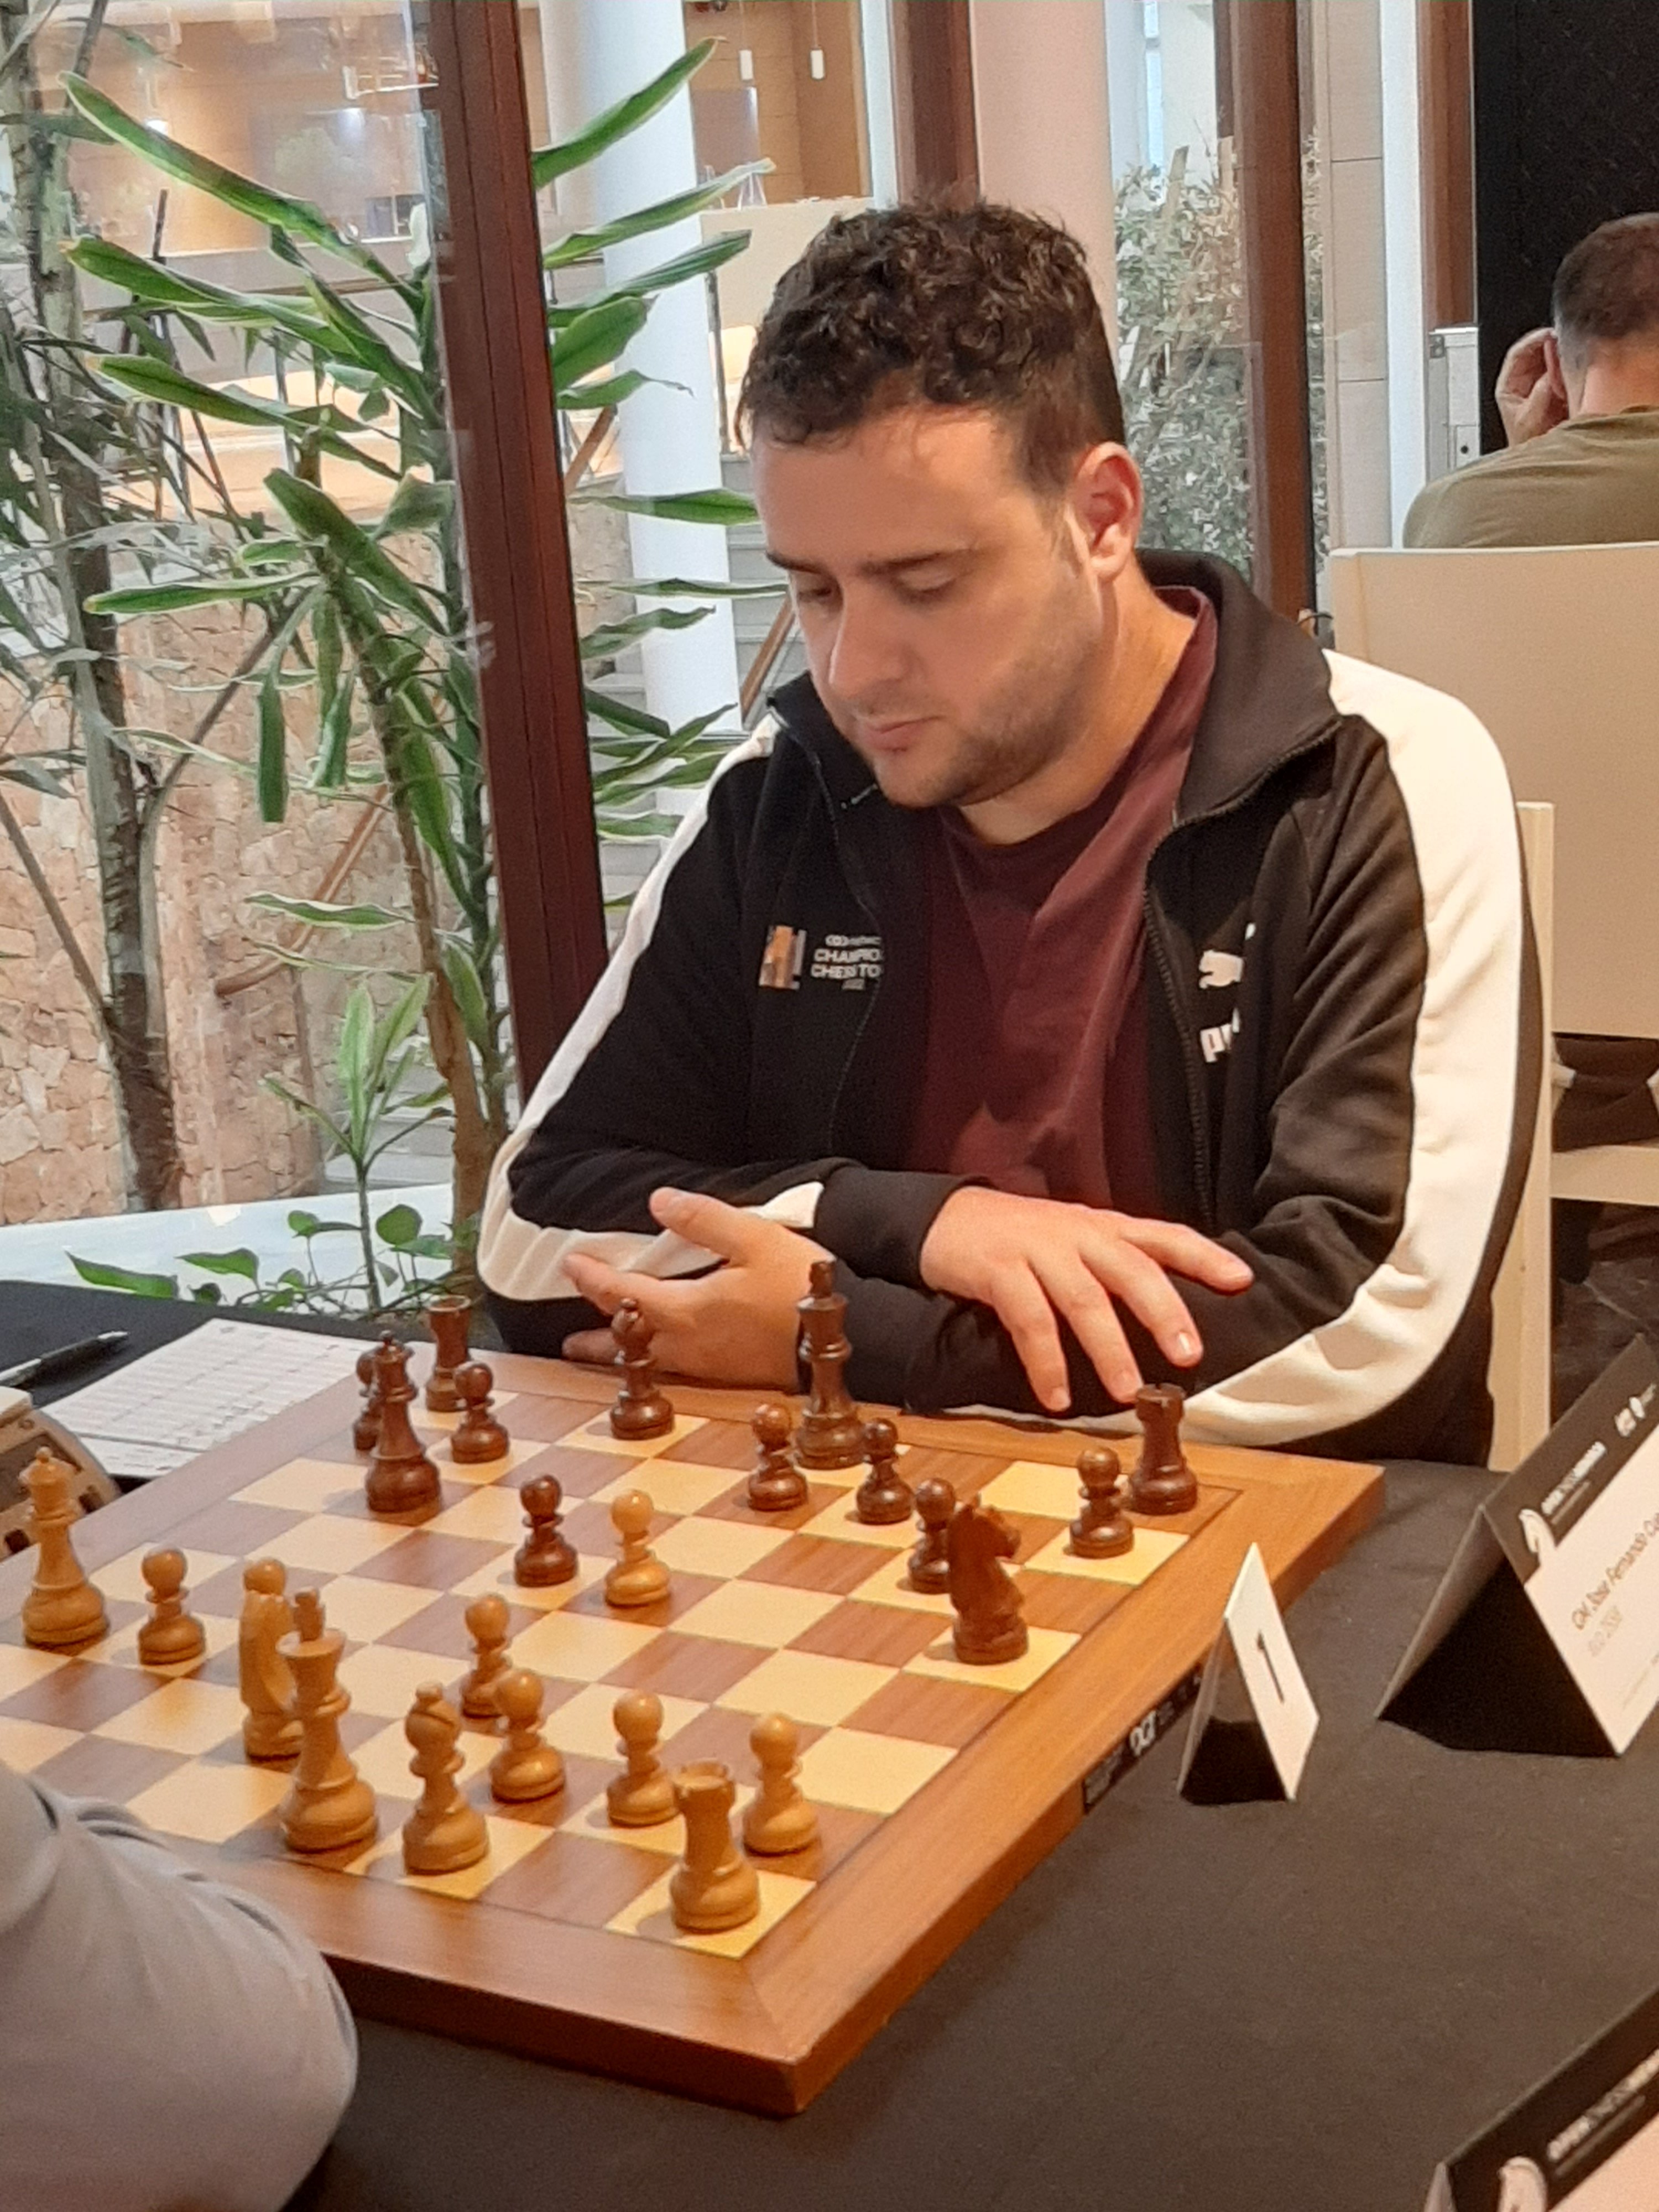 Open Chess Menorca